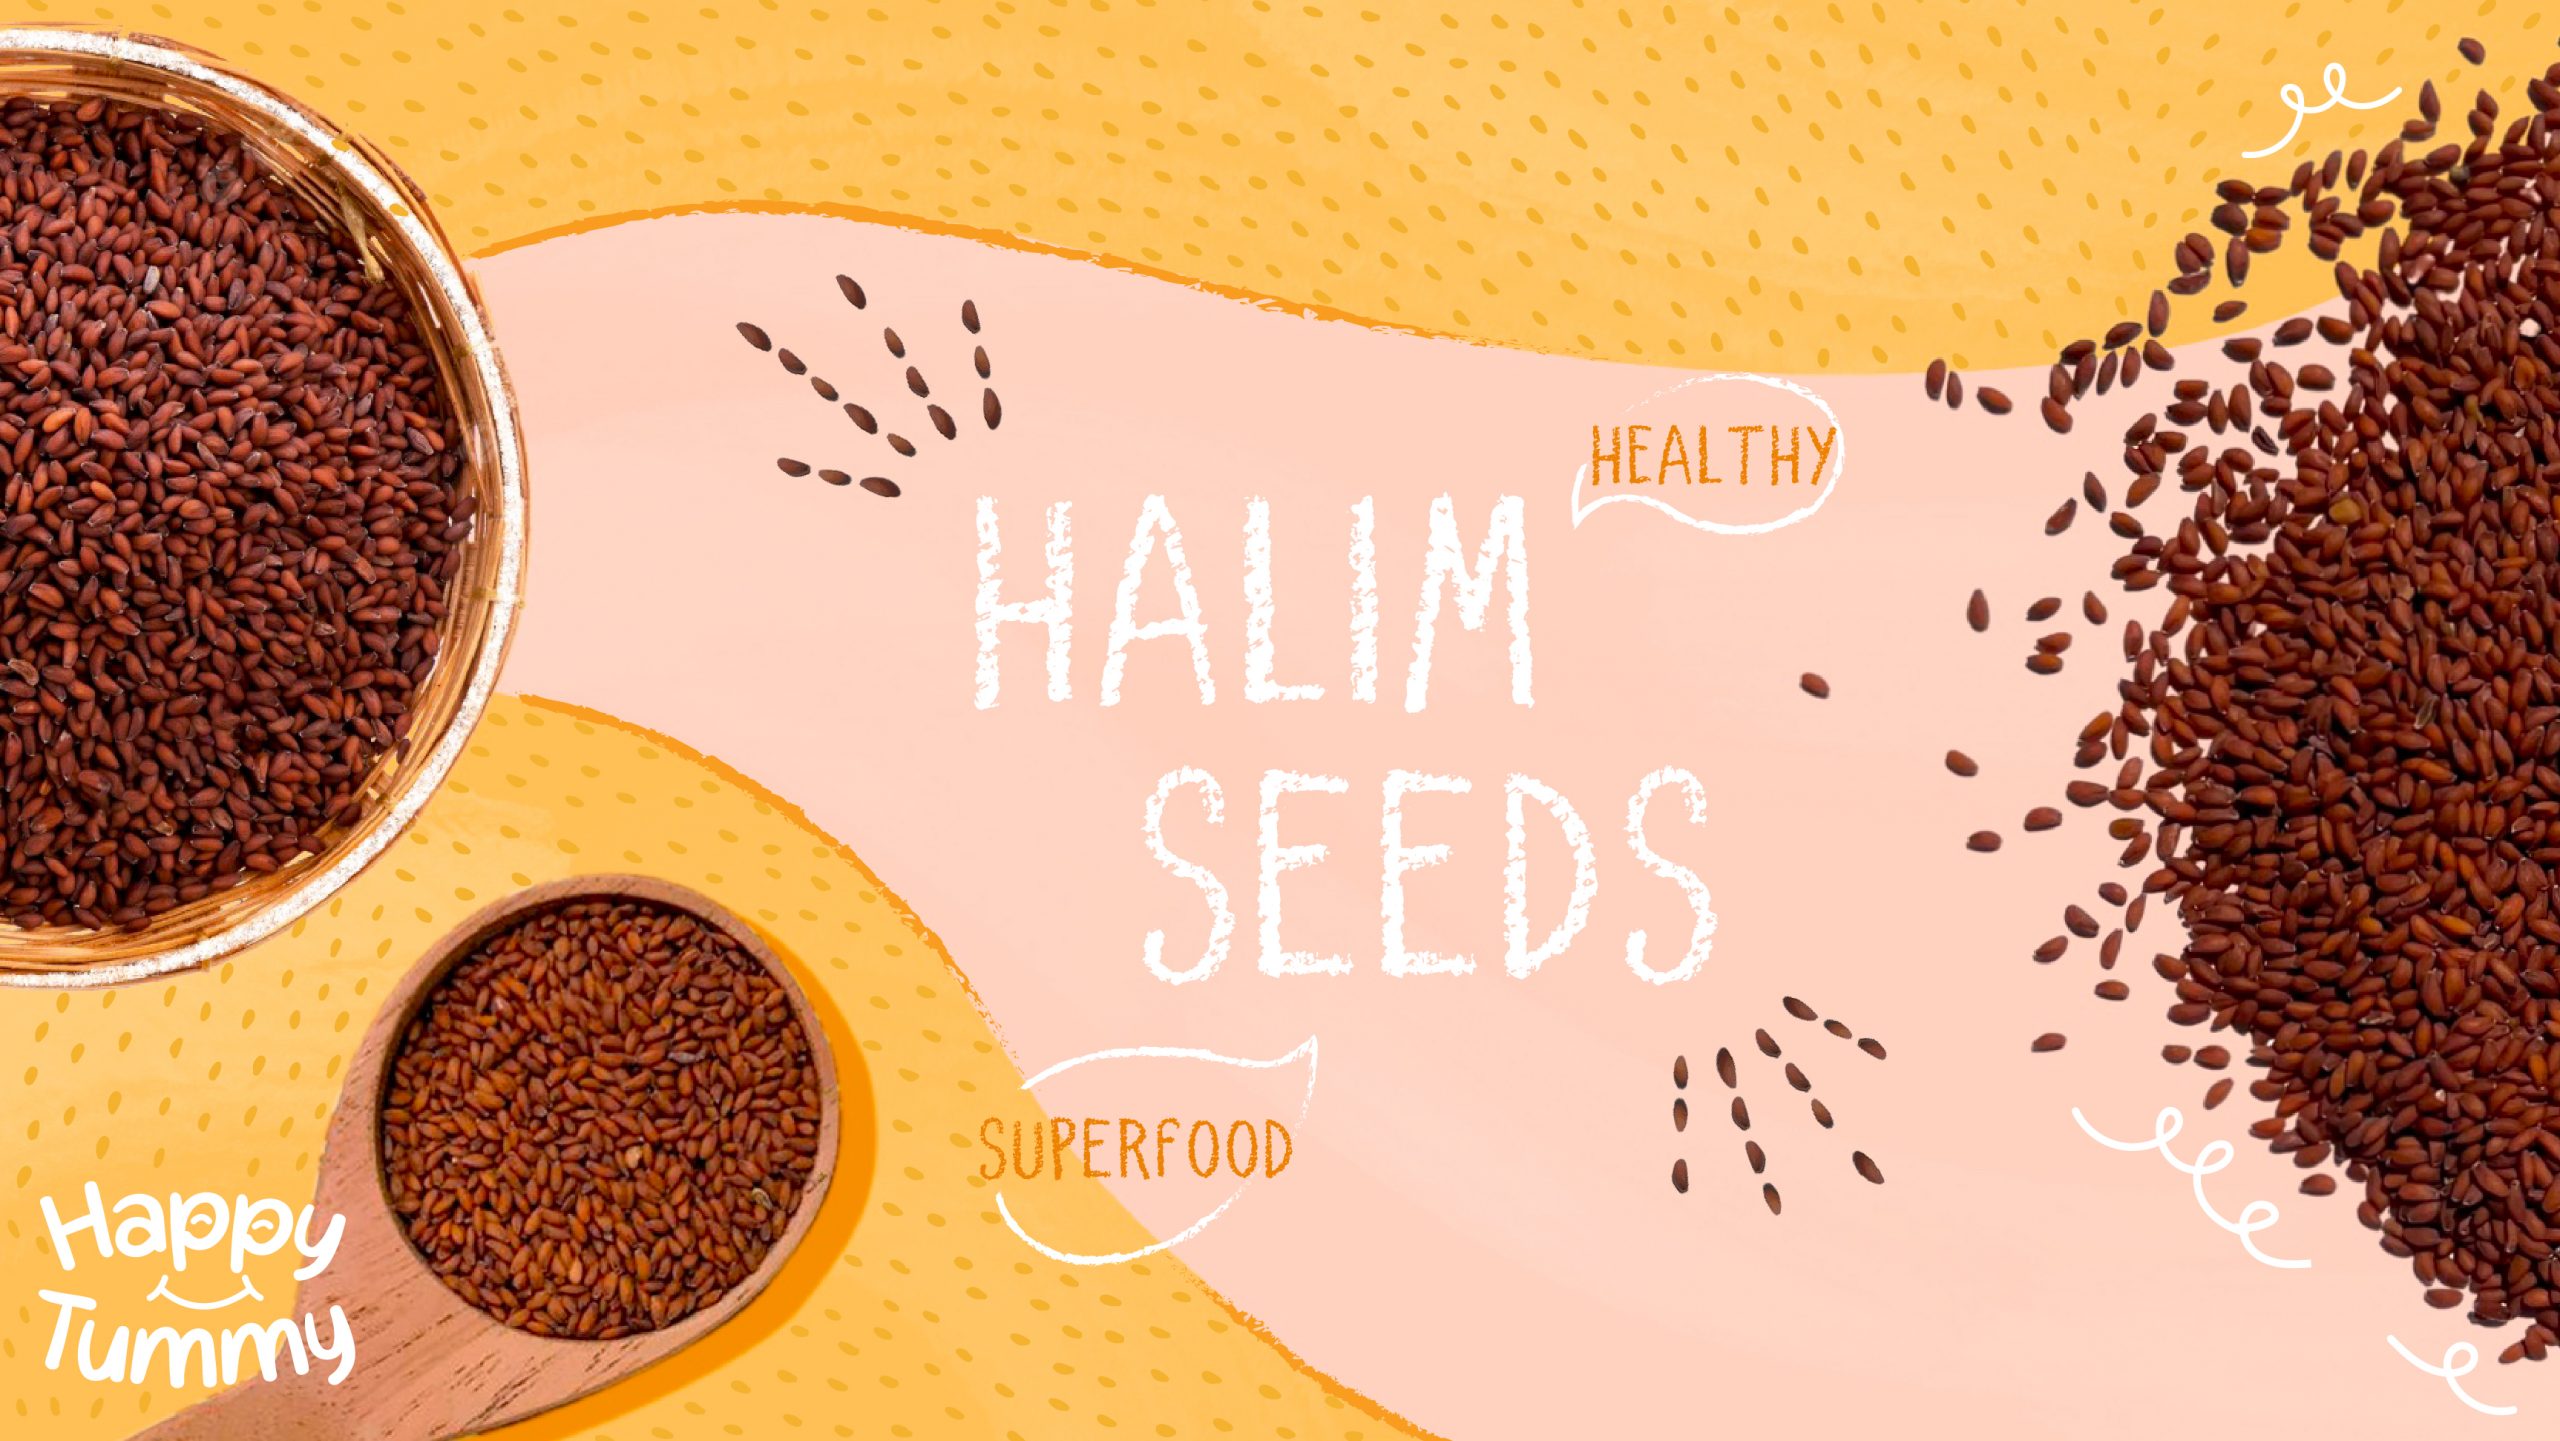 Top 11 Health Benefits Of Eating Halim Seeds (Aliv seeds)